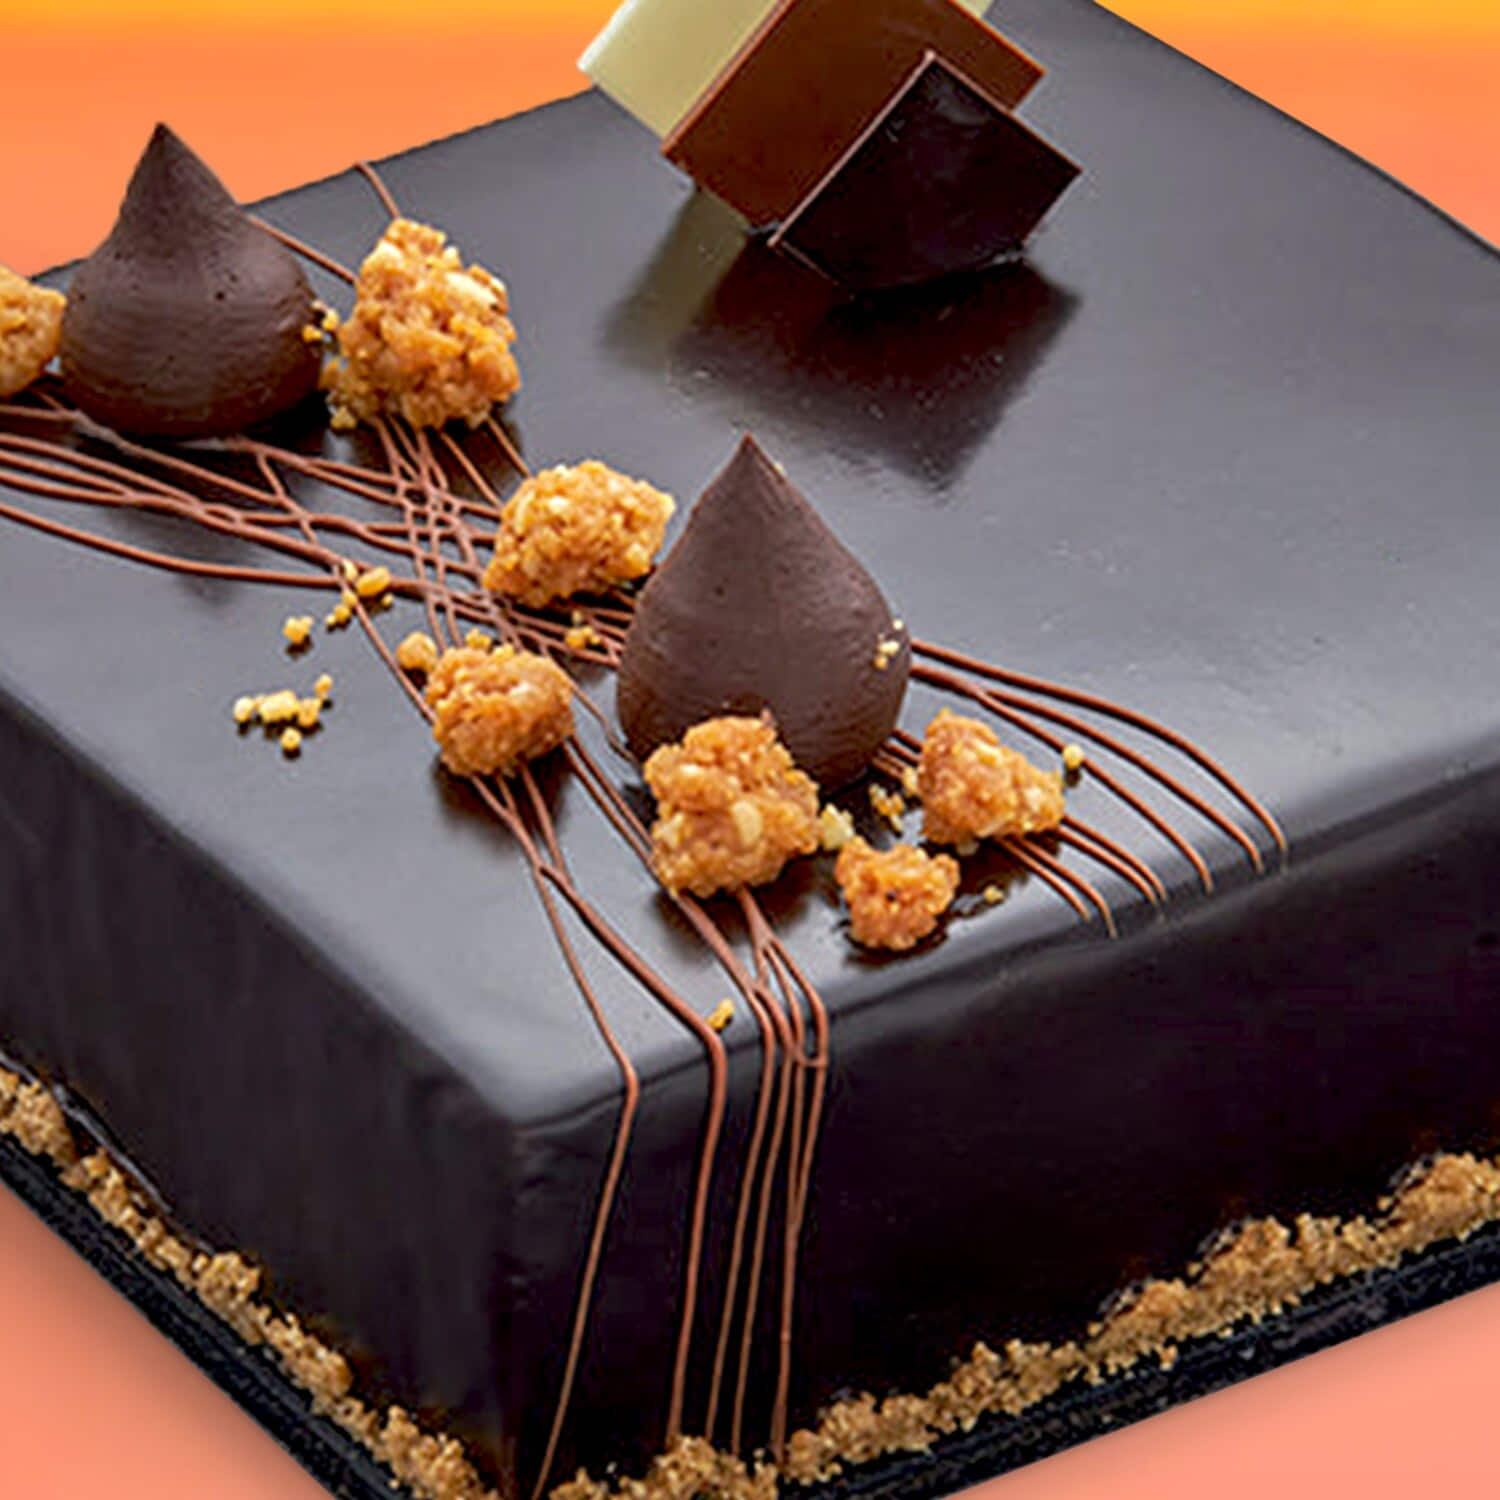 Buy Choko la Pastry - Belgian Chocolate Truffle Online at Best Price of Rs  null - bigbasket